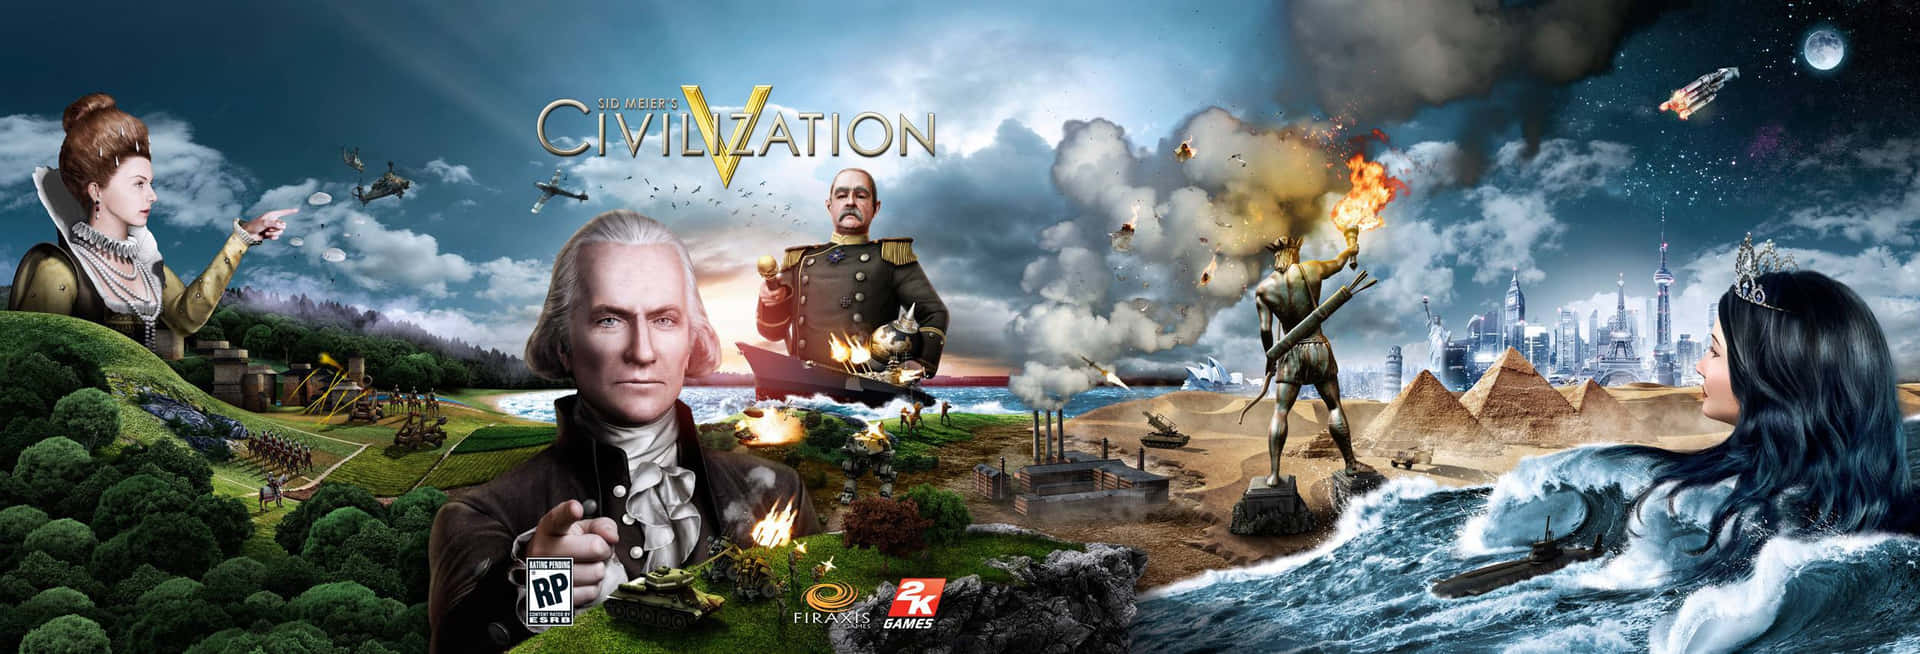 Civilizationpc-spel - Skärmbild